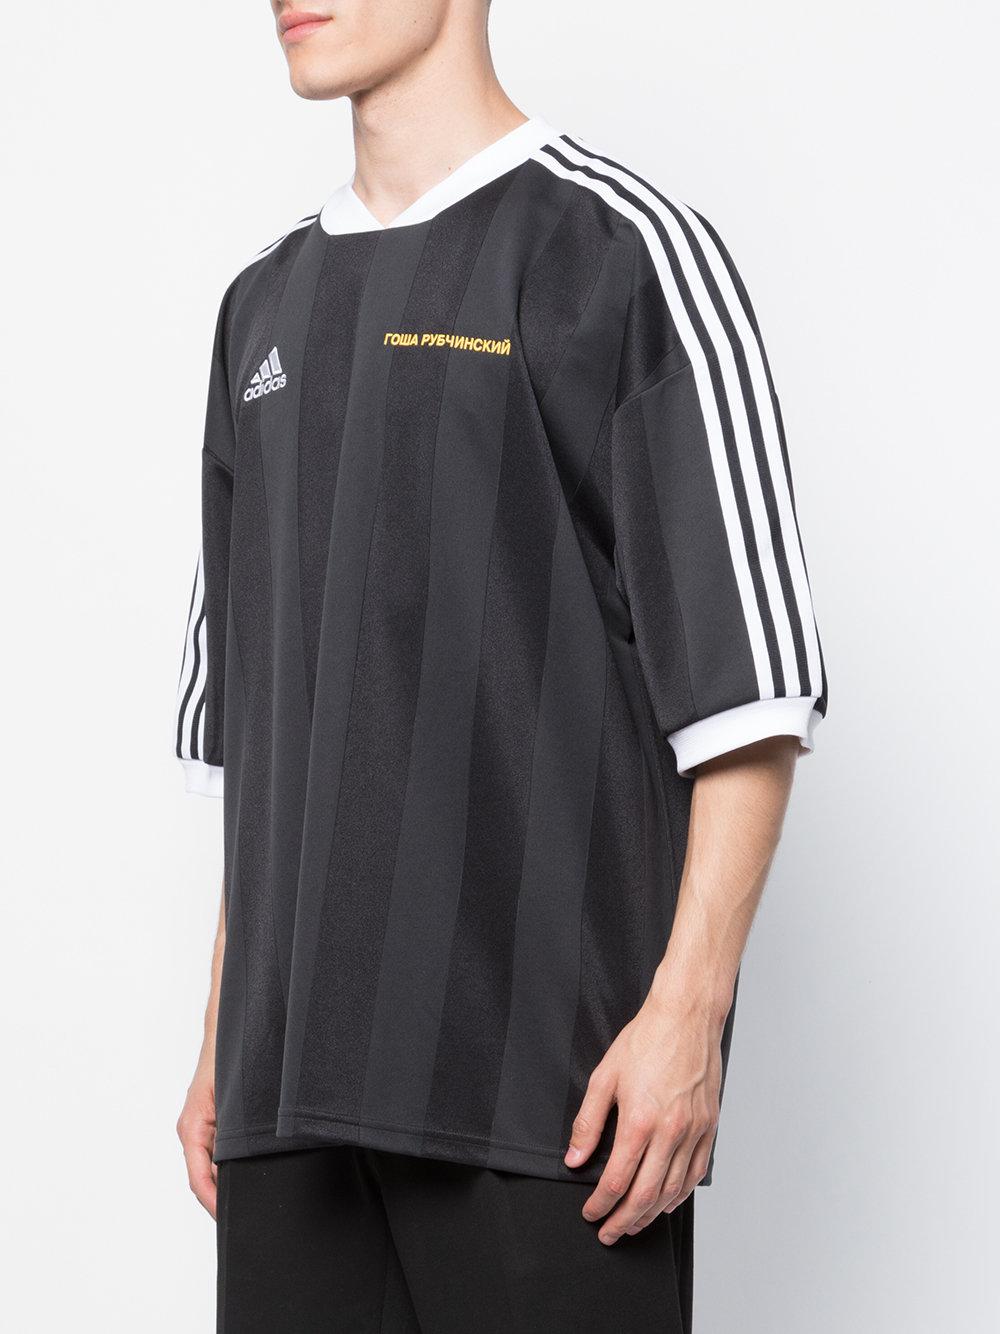 Gosha Rubchinskiy X Adidas Football T-shirt in Black for Men | Lyst UK